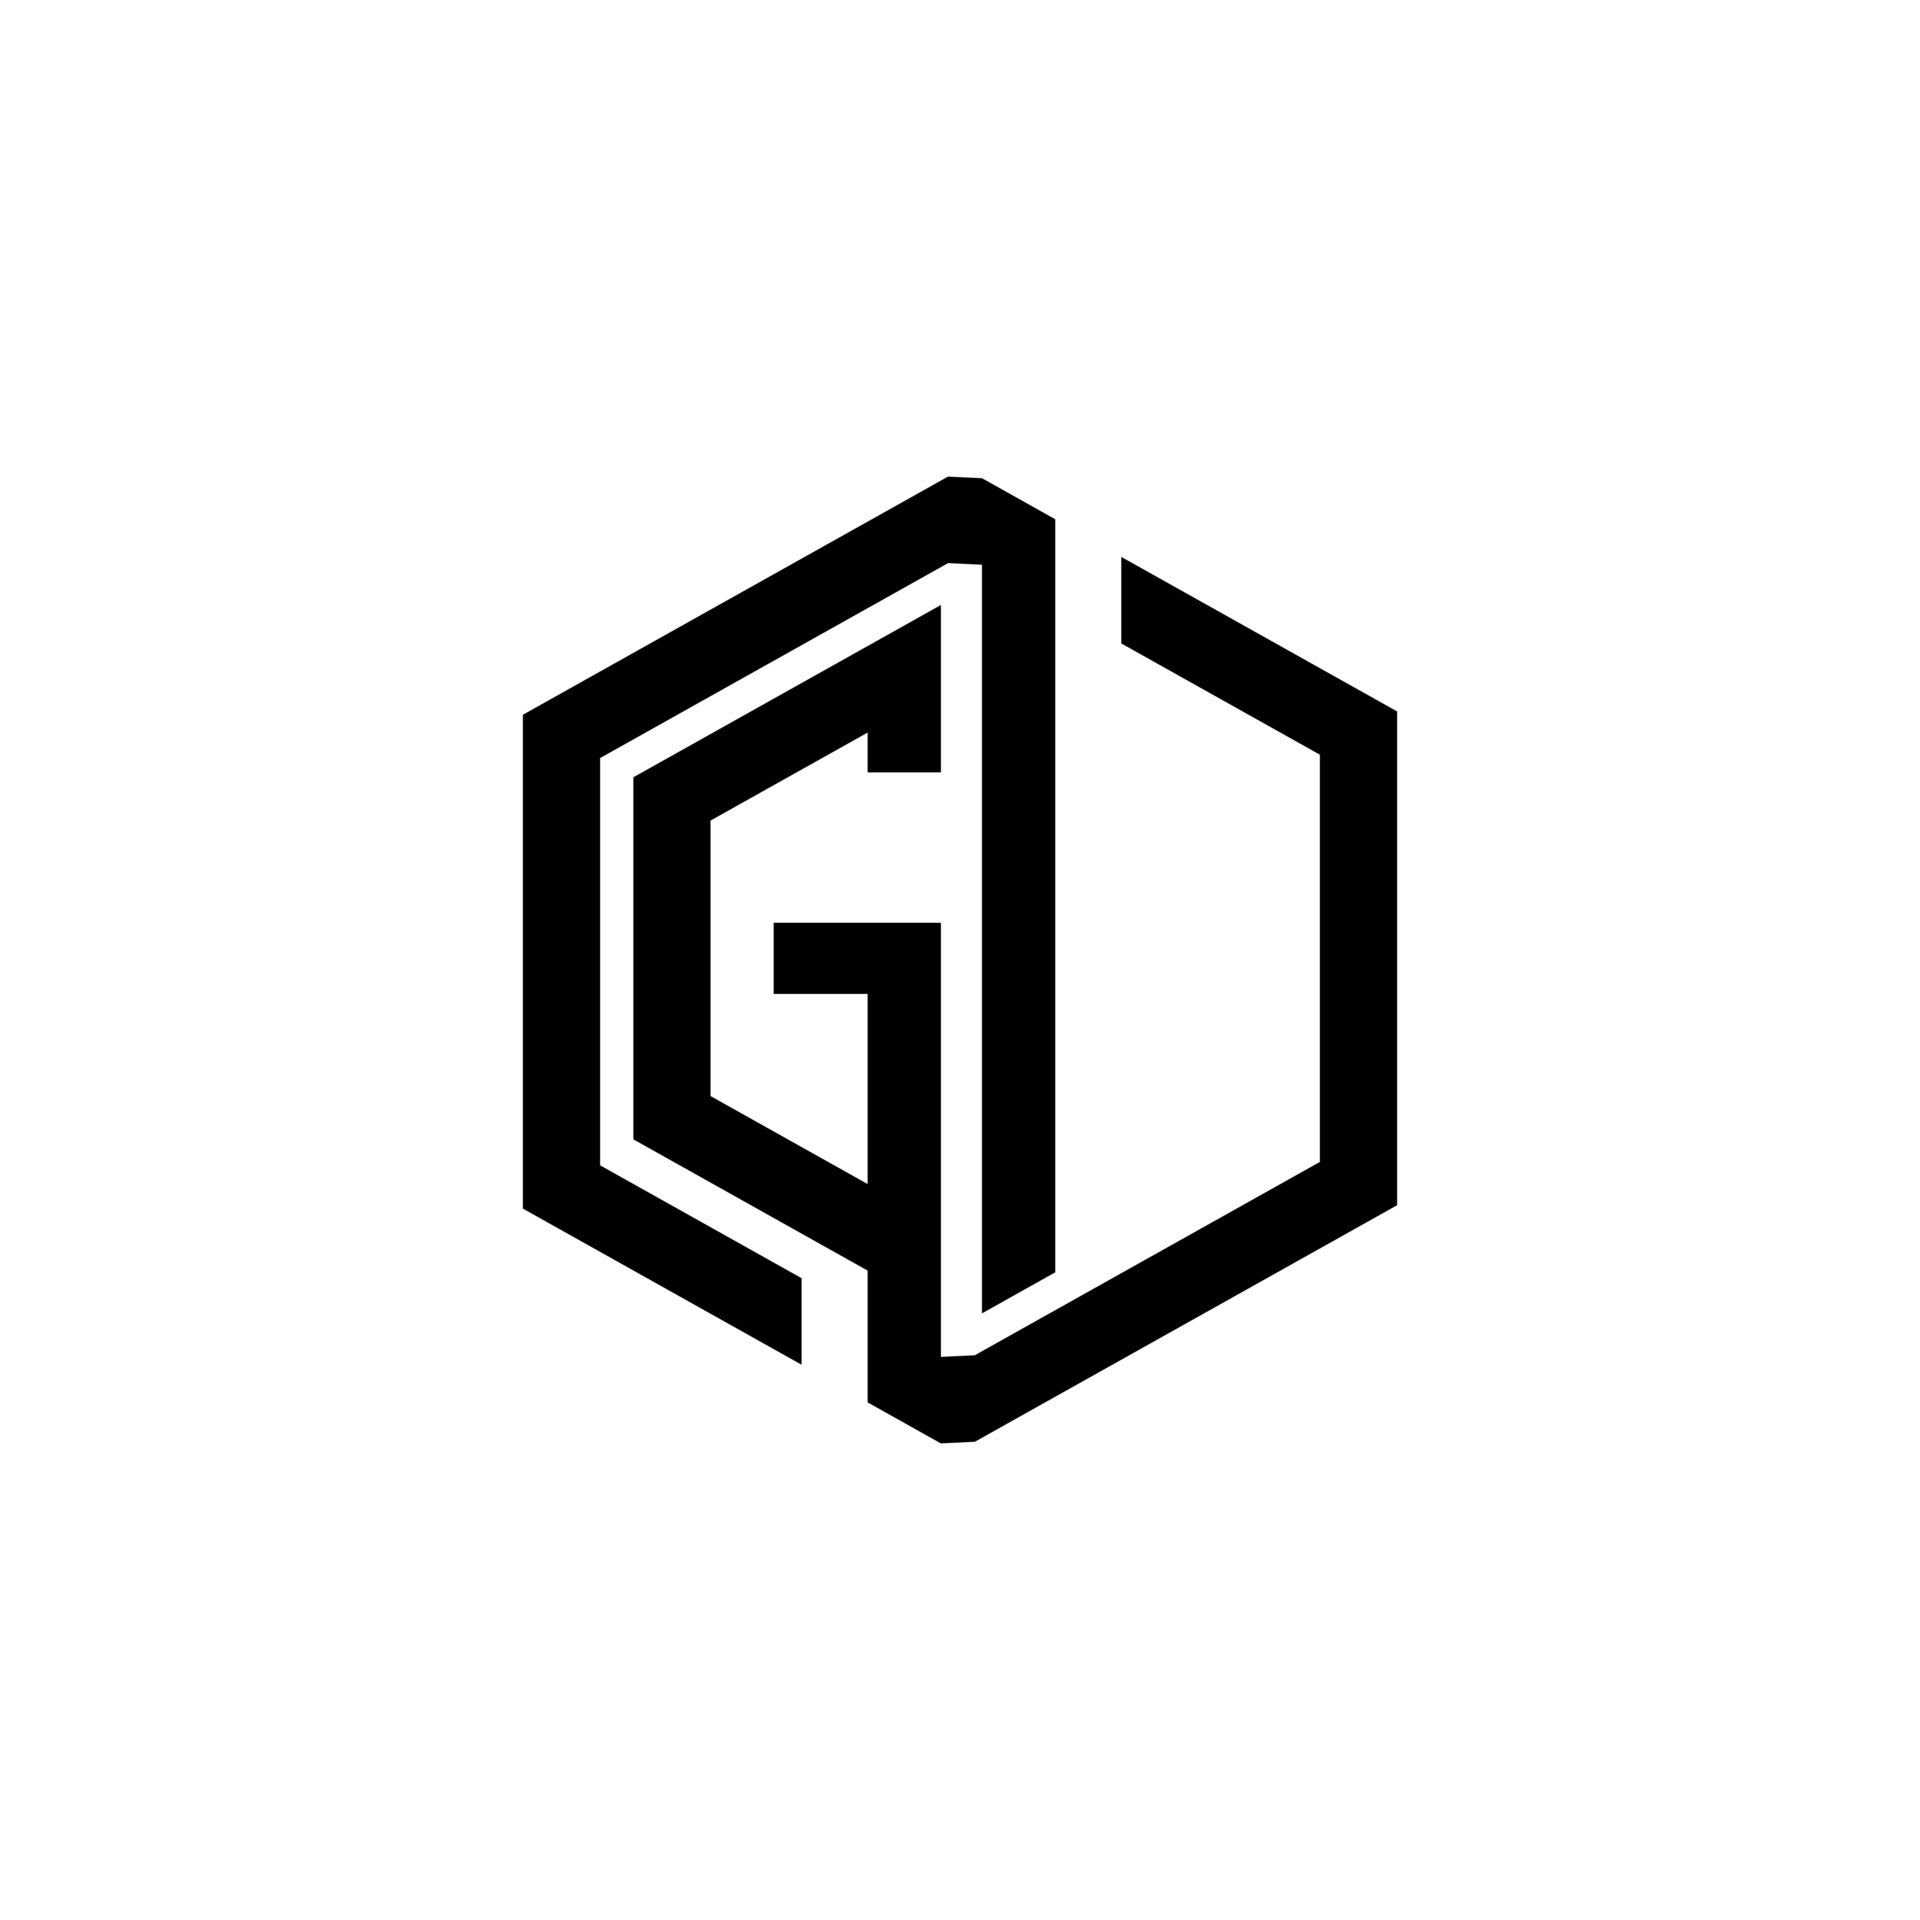 GI letter logo design in illustration. Vector logo, calligraphy designs ...